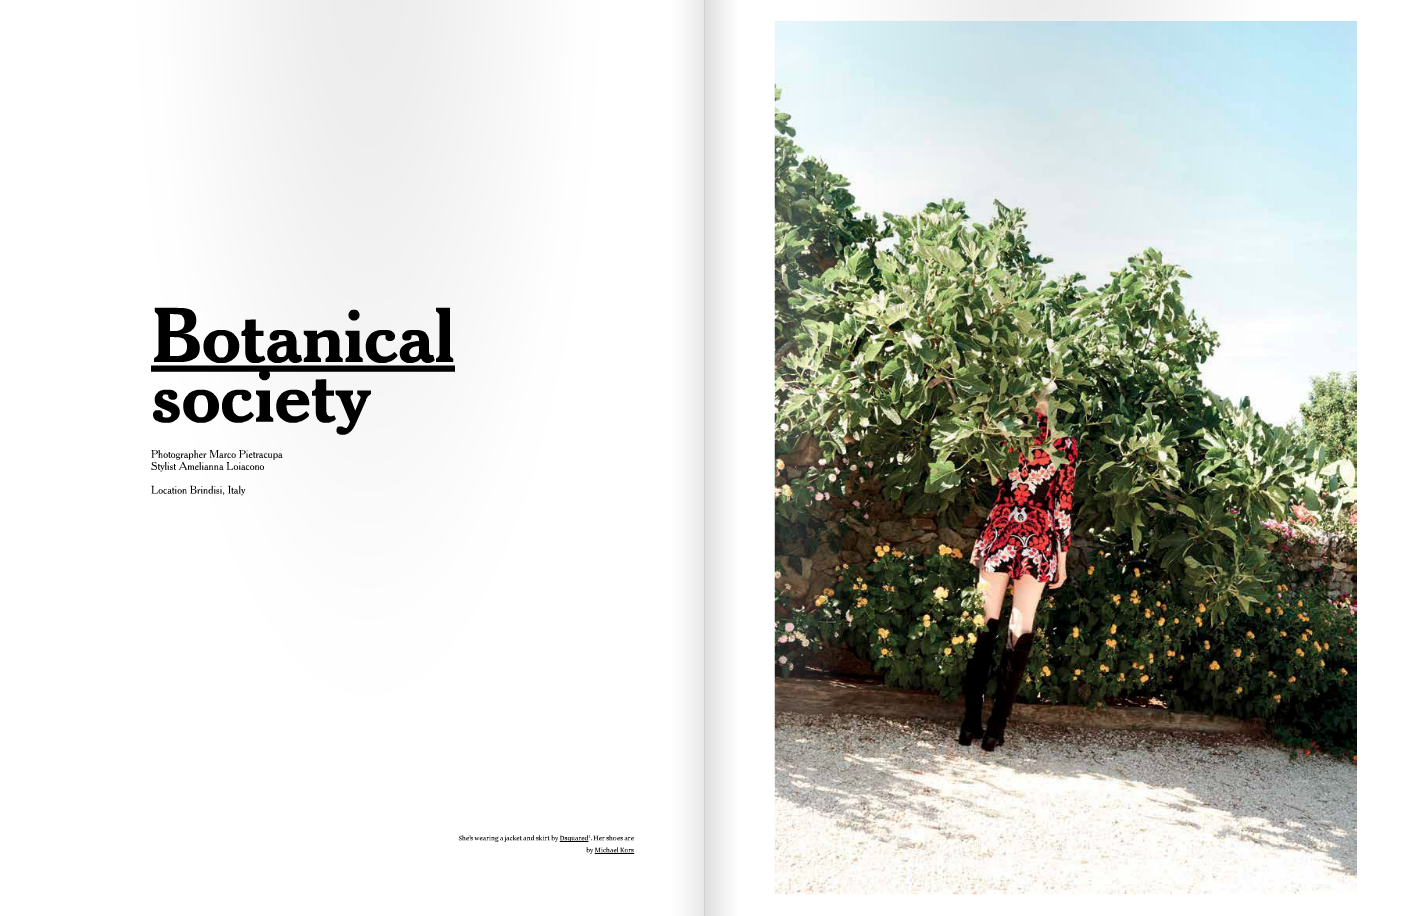 Aishti Magazine Oct/Nov 2015 “Botanical Society” | Marco Pietracupa | Aishti magazine | Amelianna Loiacono | Numerique Retouch Photo Retouching Studio